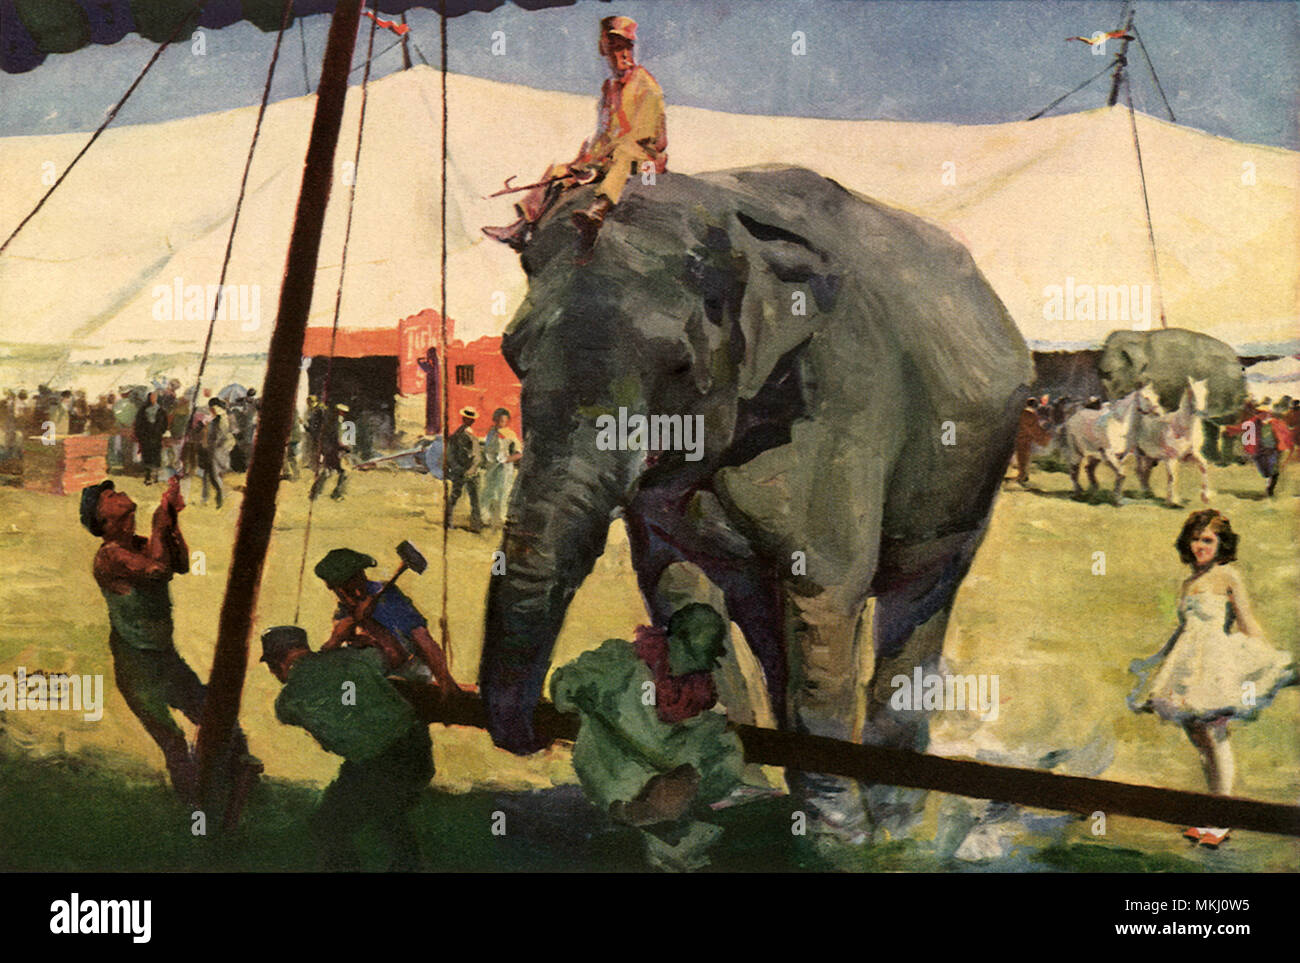 Circus Elephant at Work Stock Photo